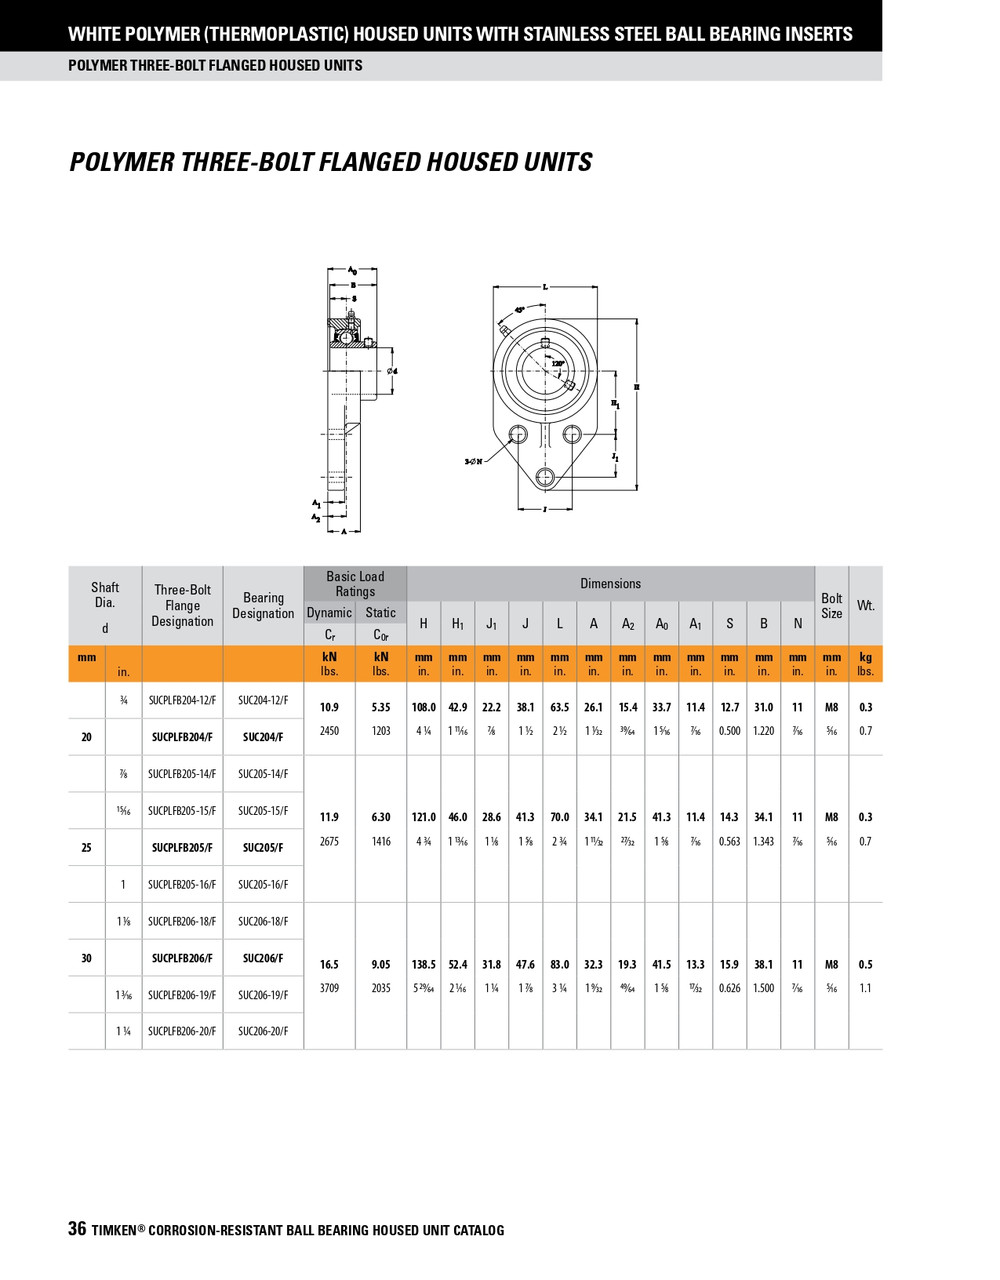 1-3/16" Polymer Set Screw Three-Bolt Flange Block Assembly   SUCPLFB206-19/F